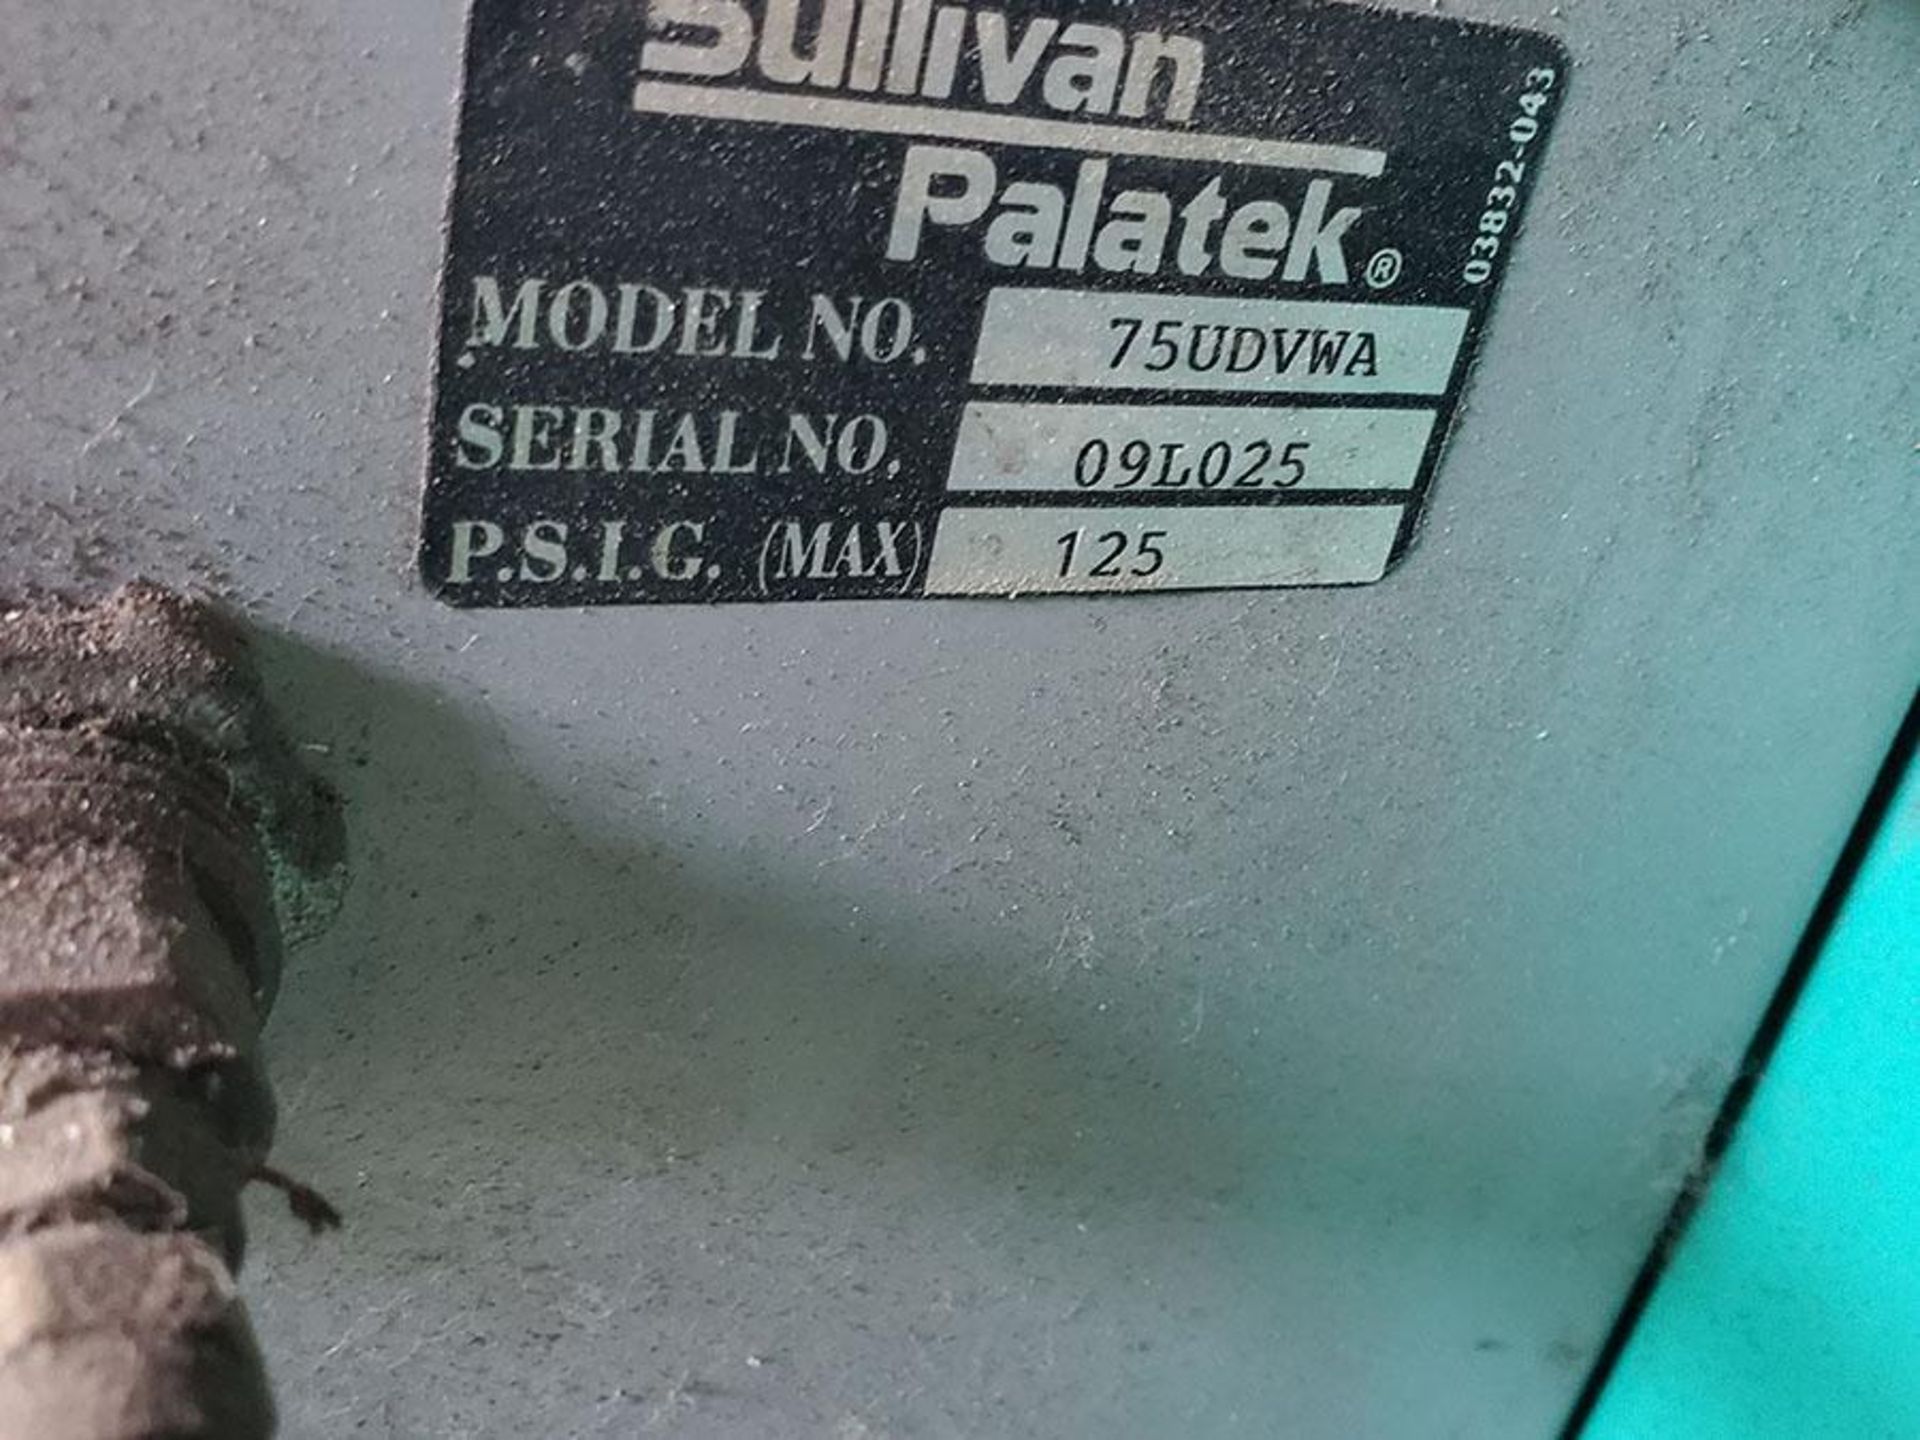 SULLIVAN PALATEK AIR COMPRESSOR WITH DRYER AND 400 GALLON TANK; COMPRESSOR: 460V 3PHASE 60HZ 92(3.1) - Image 2 of 4